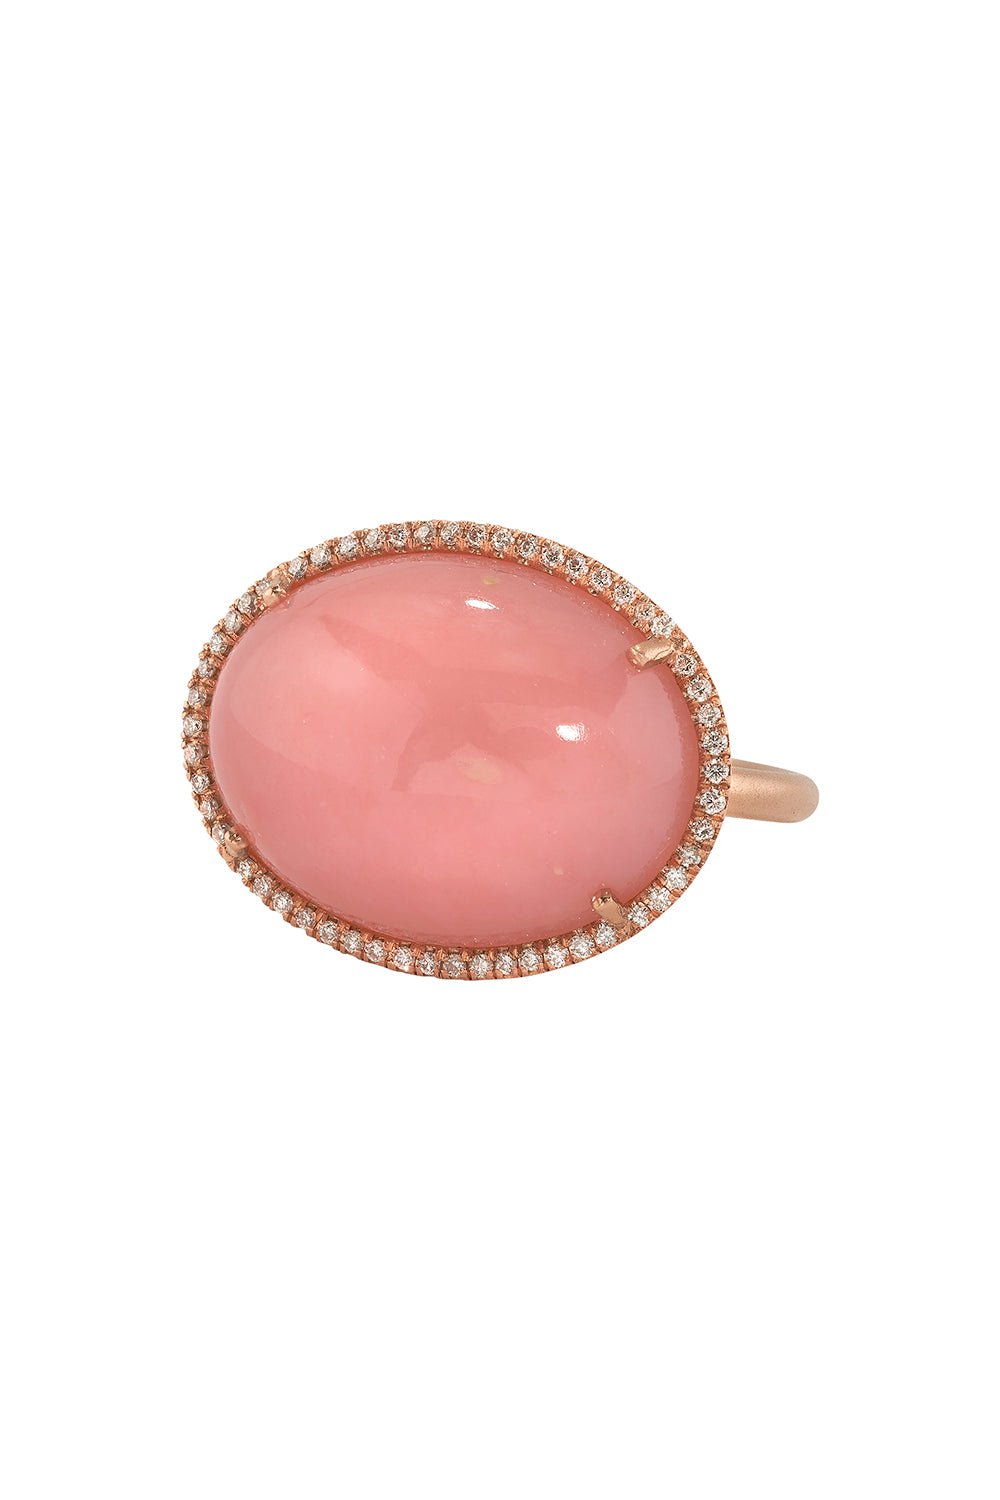 IRENE NEUWIRTH JEWELRY-Classic Pink Opal Ring-ROSE GOLD